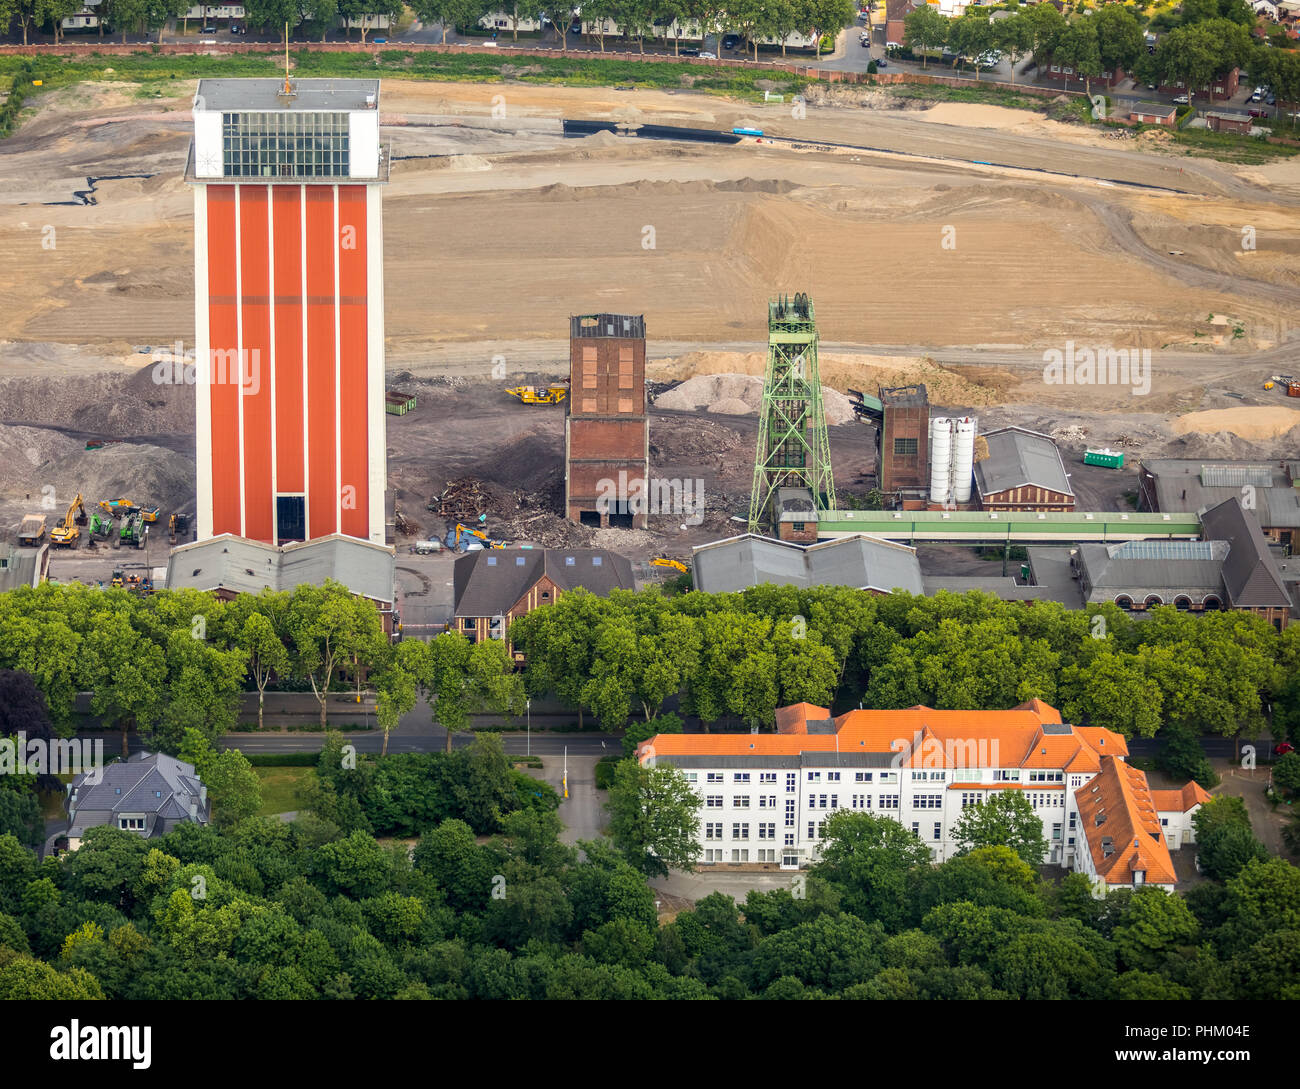 Aerial photo, winding tower of Friedrich Heinrich Schacht 1/2 colliery in Kamp-Lintfort, former West Friedrich-Heinrich colliery, winding tower Kamp-L Stock Photo